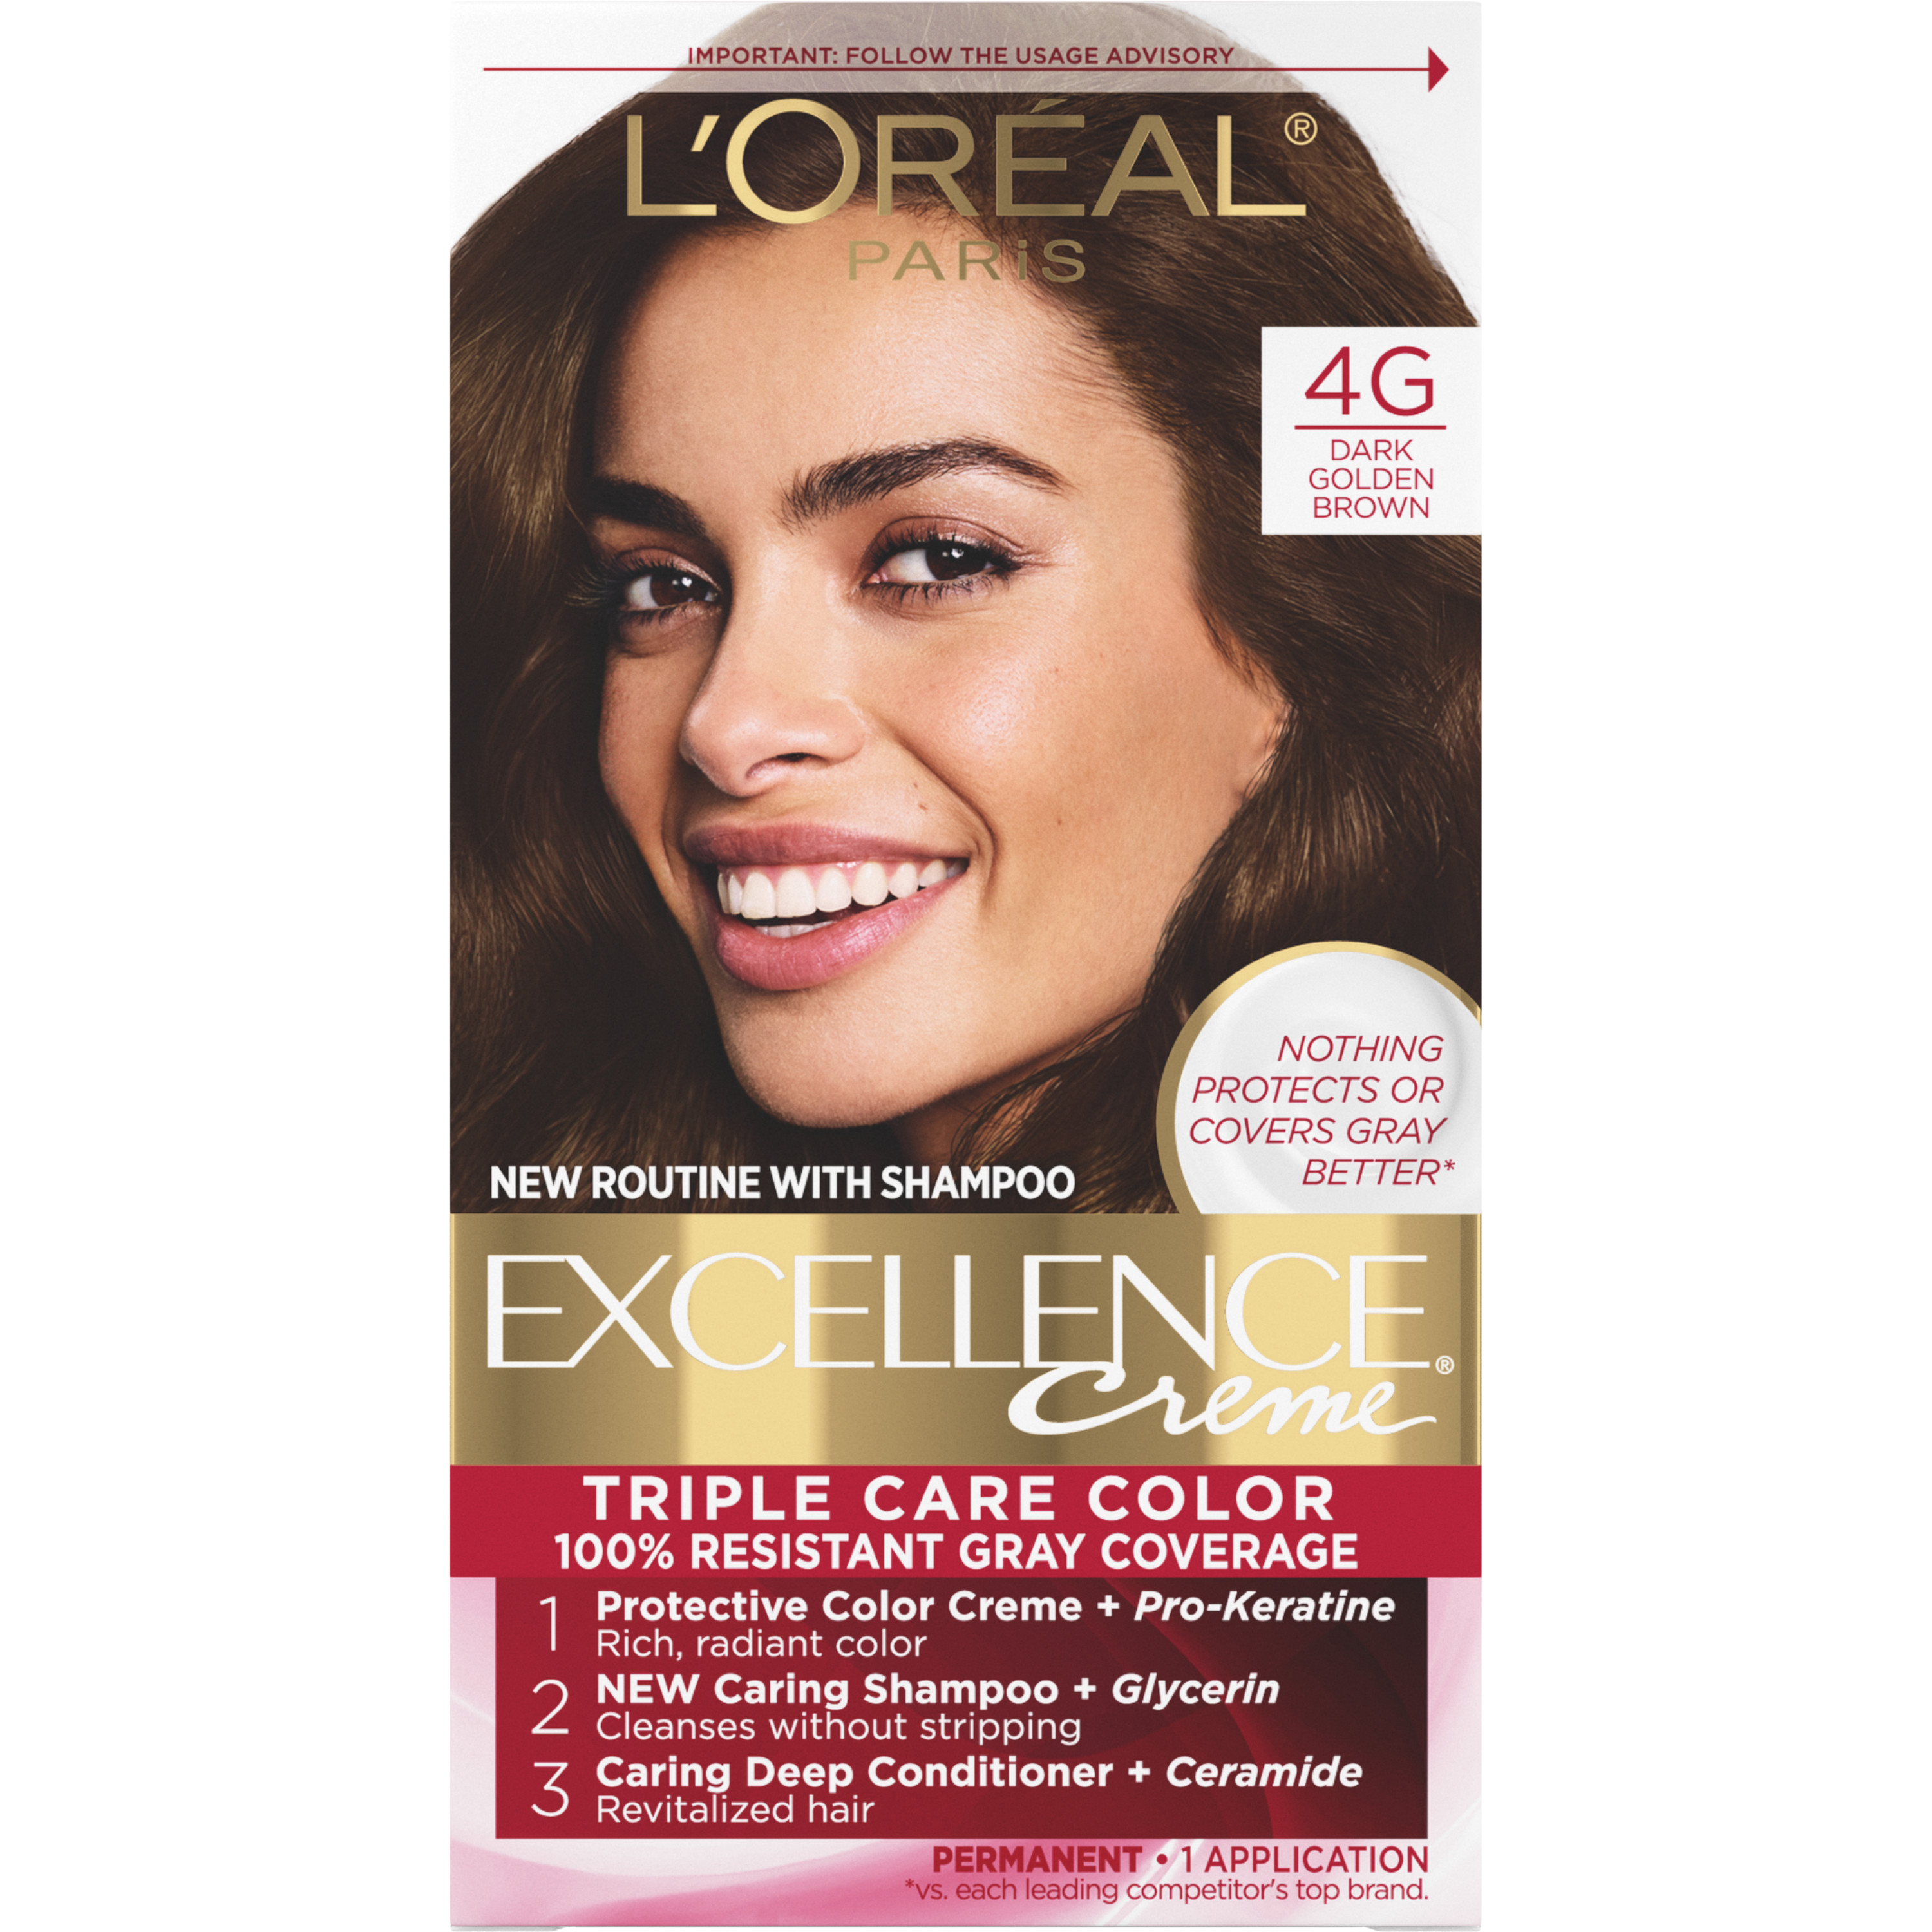 L'Oreal Paris Excellence Creme Permanent Hair Color, 4G Dark Golden Brown - image 1 of 11